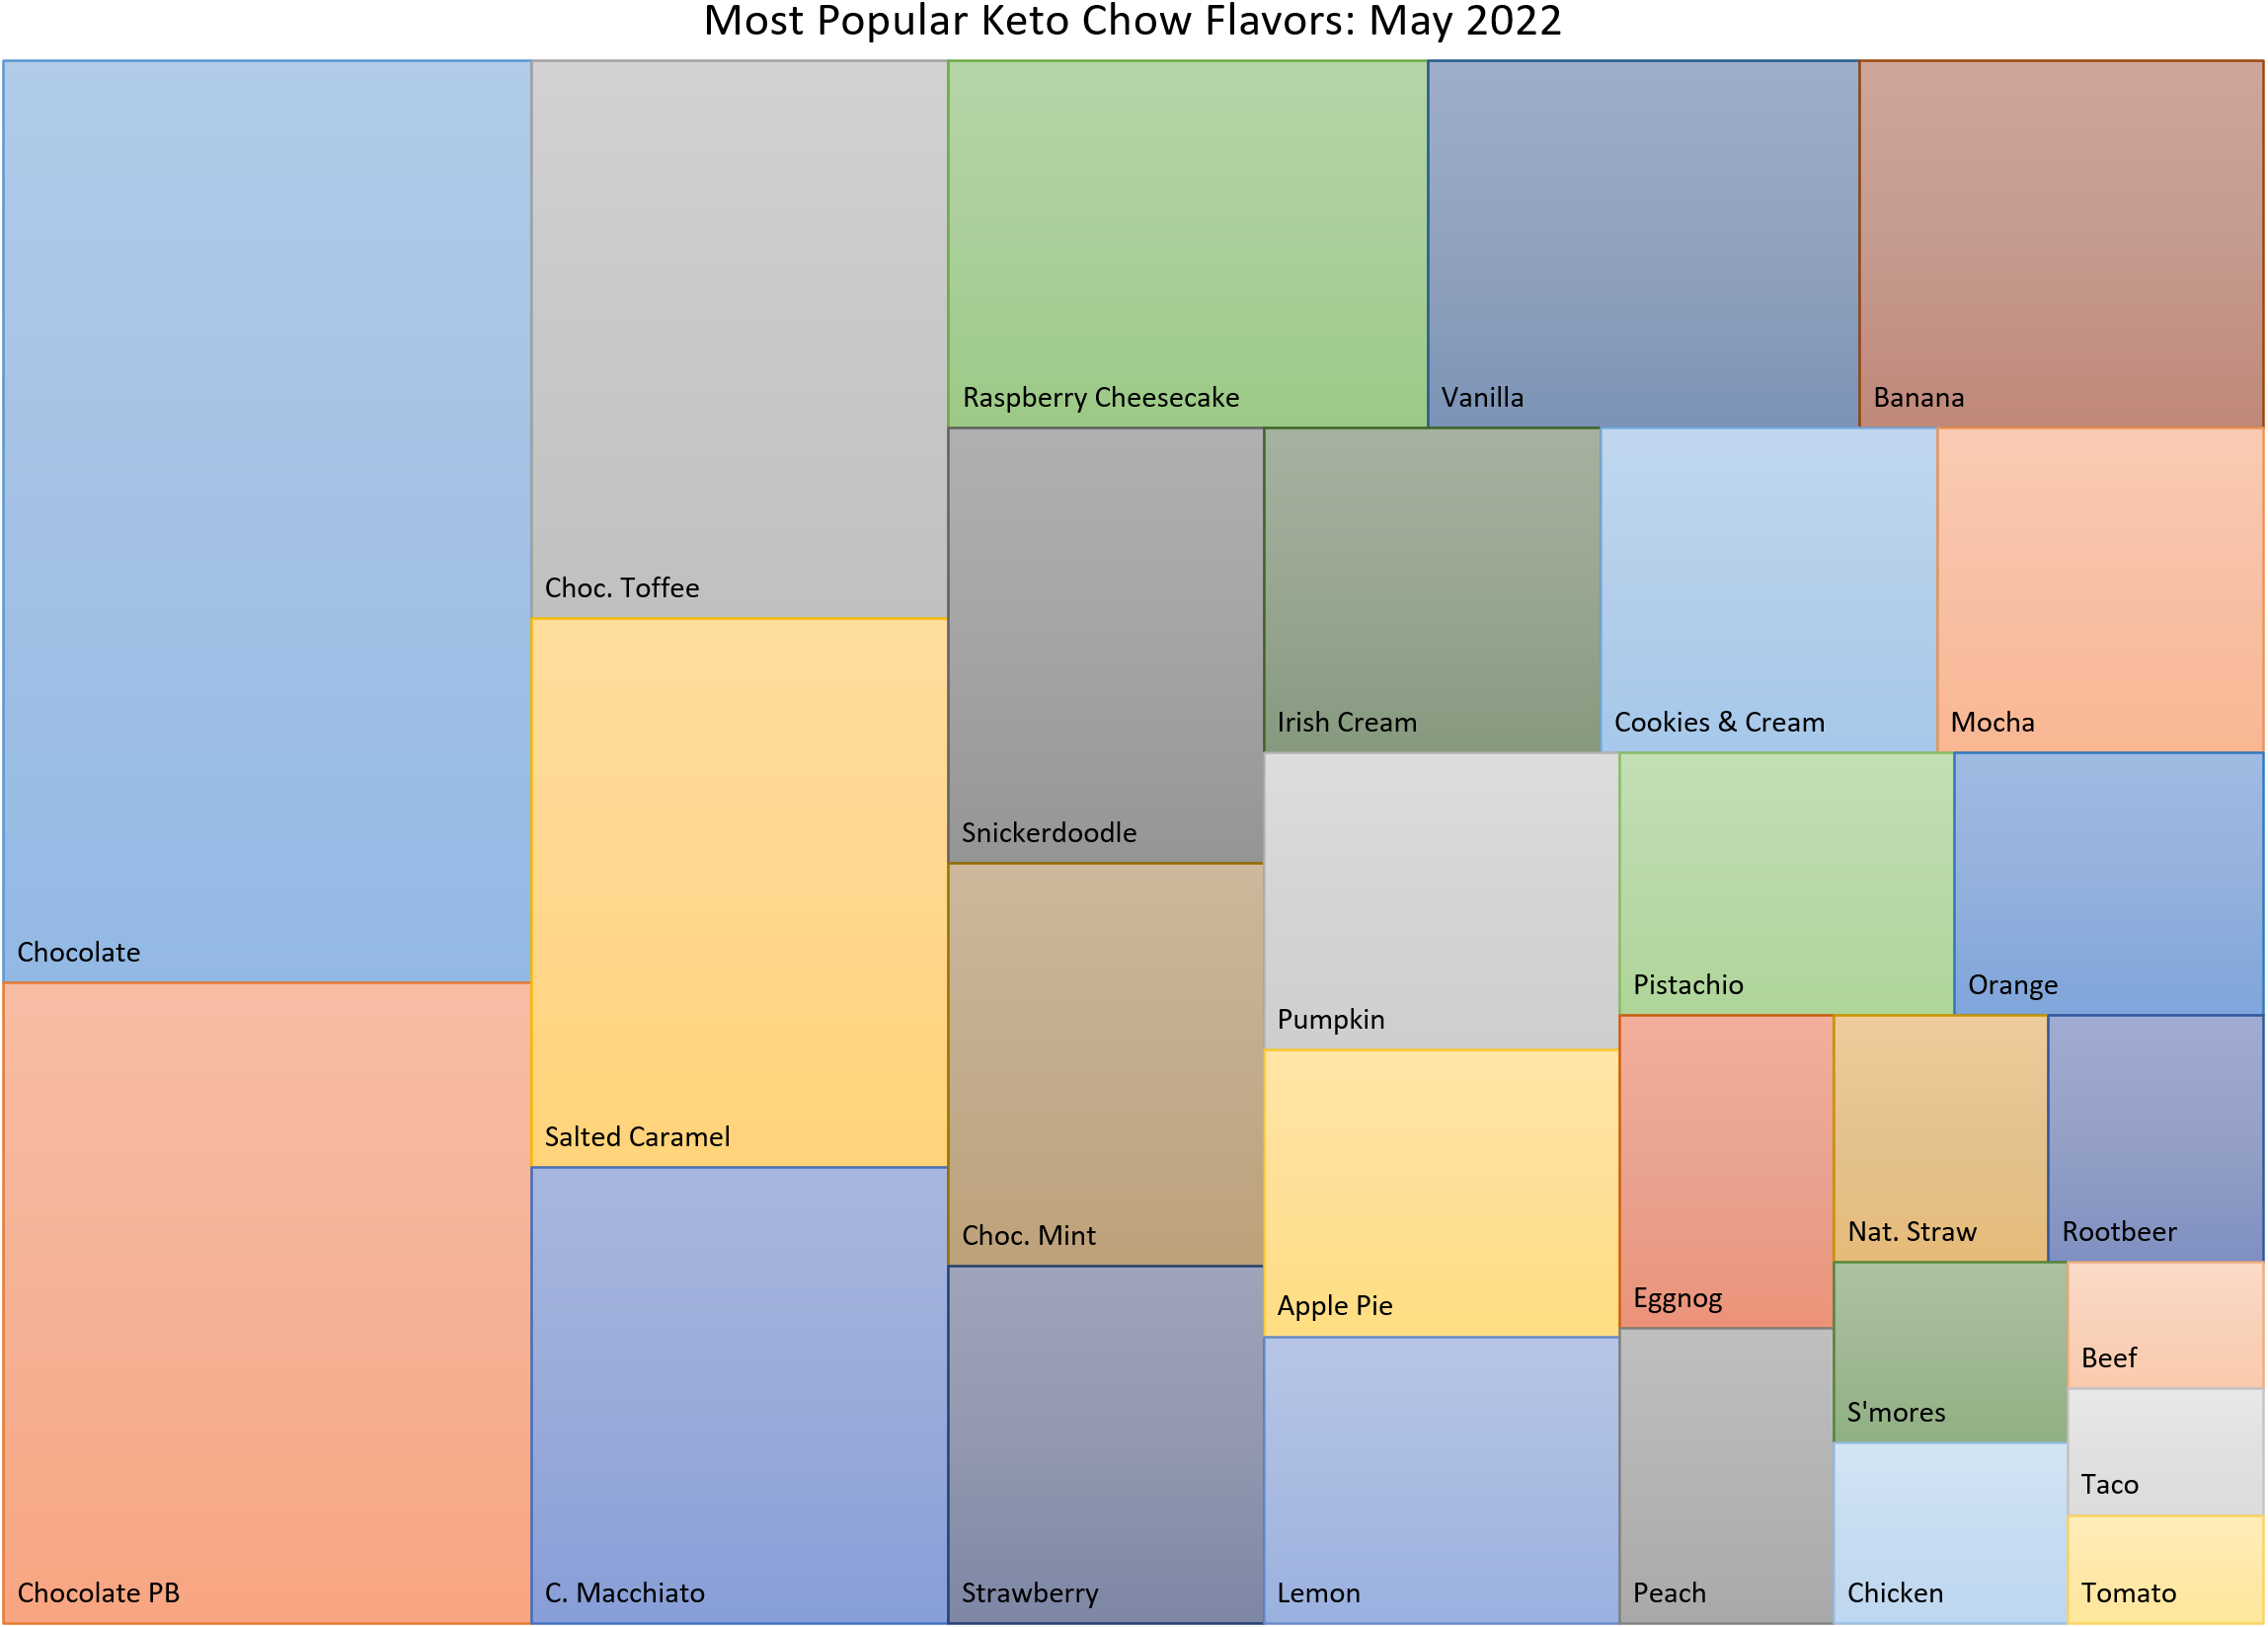 Keto chow popular flavors graph